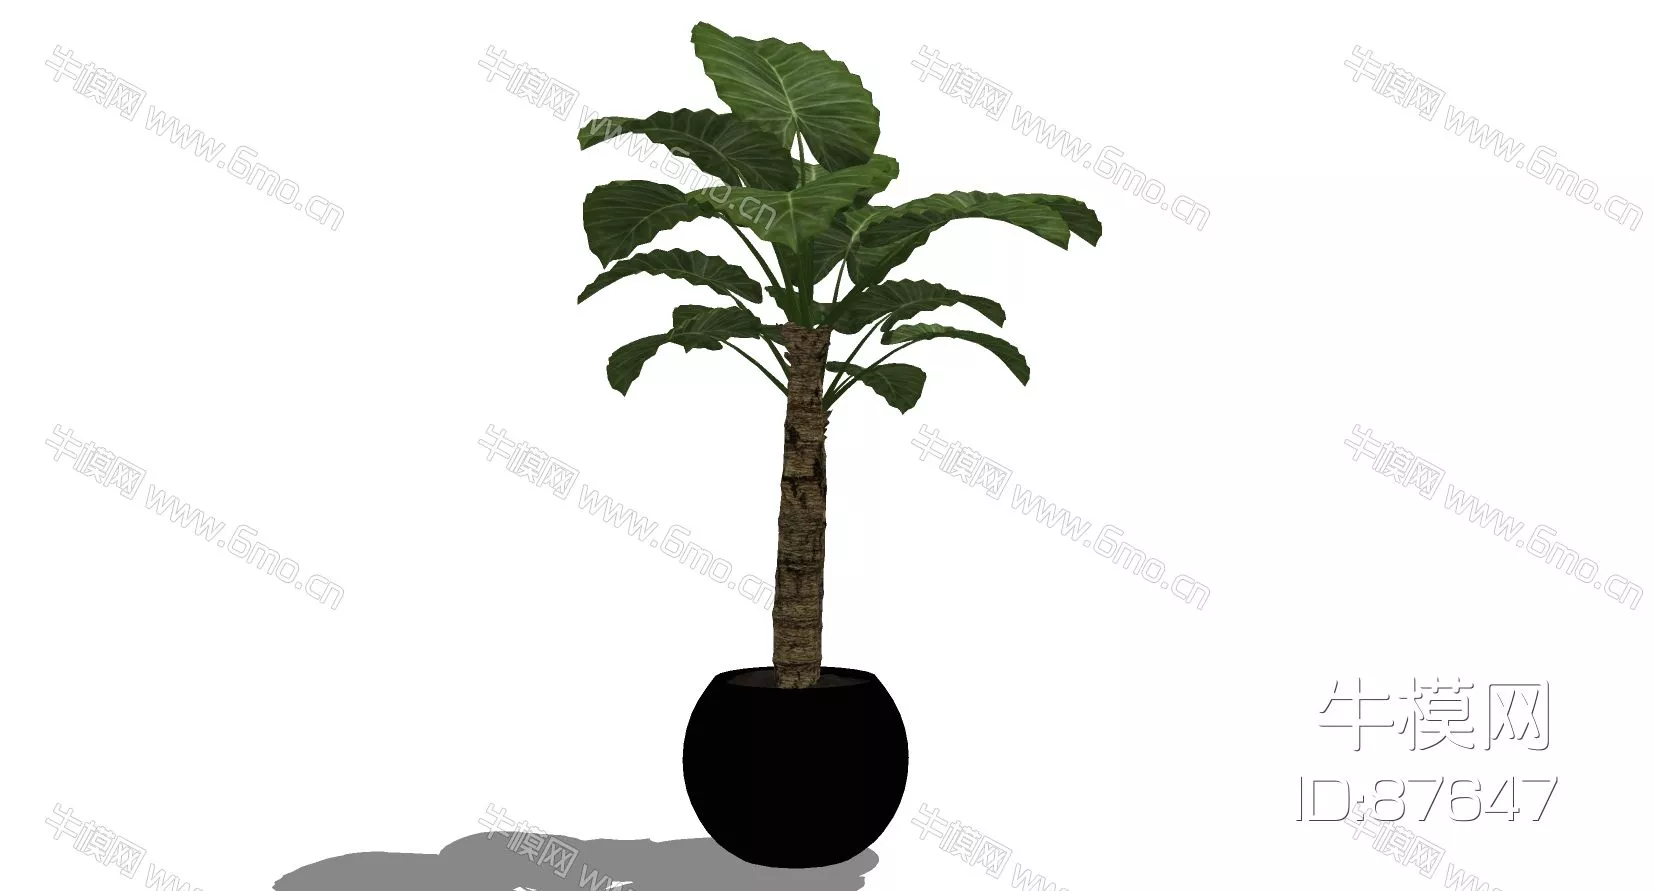 OUTDOOR POTTED PLANT - SKETCHUP 3D MODEL - ENSCAPE - 87647